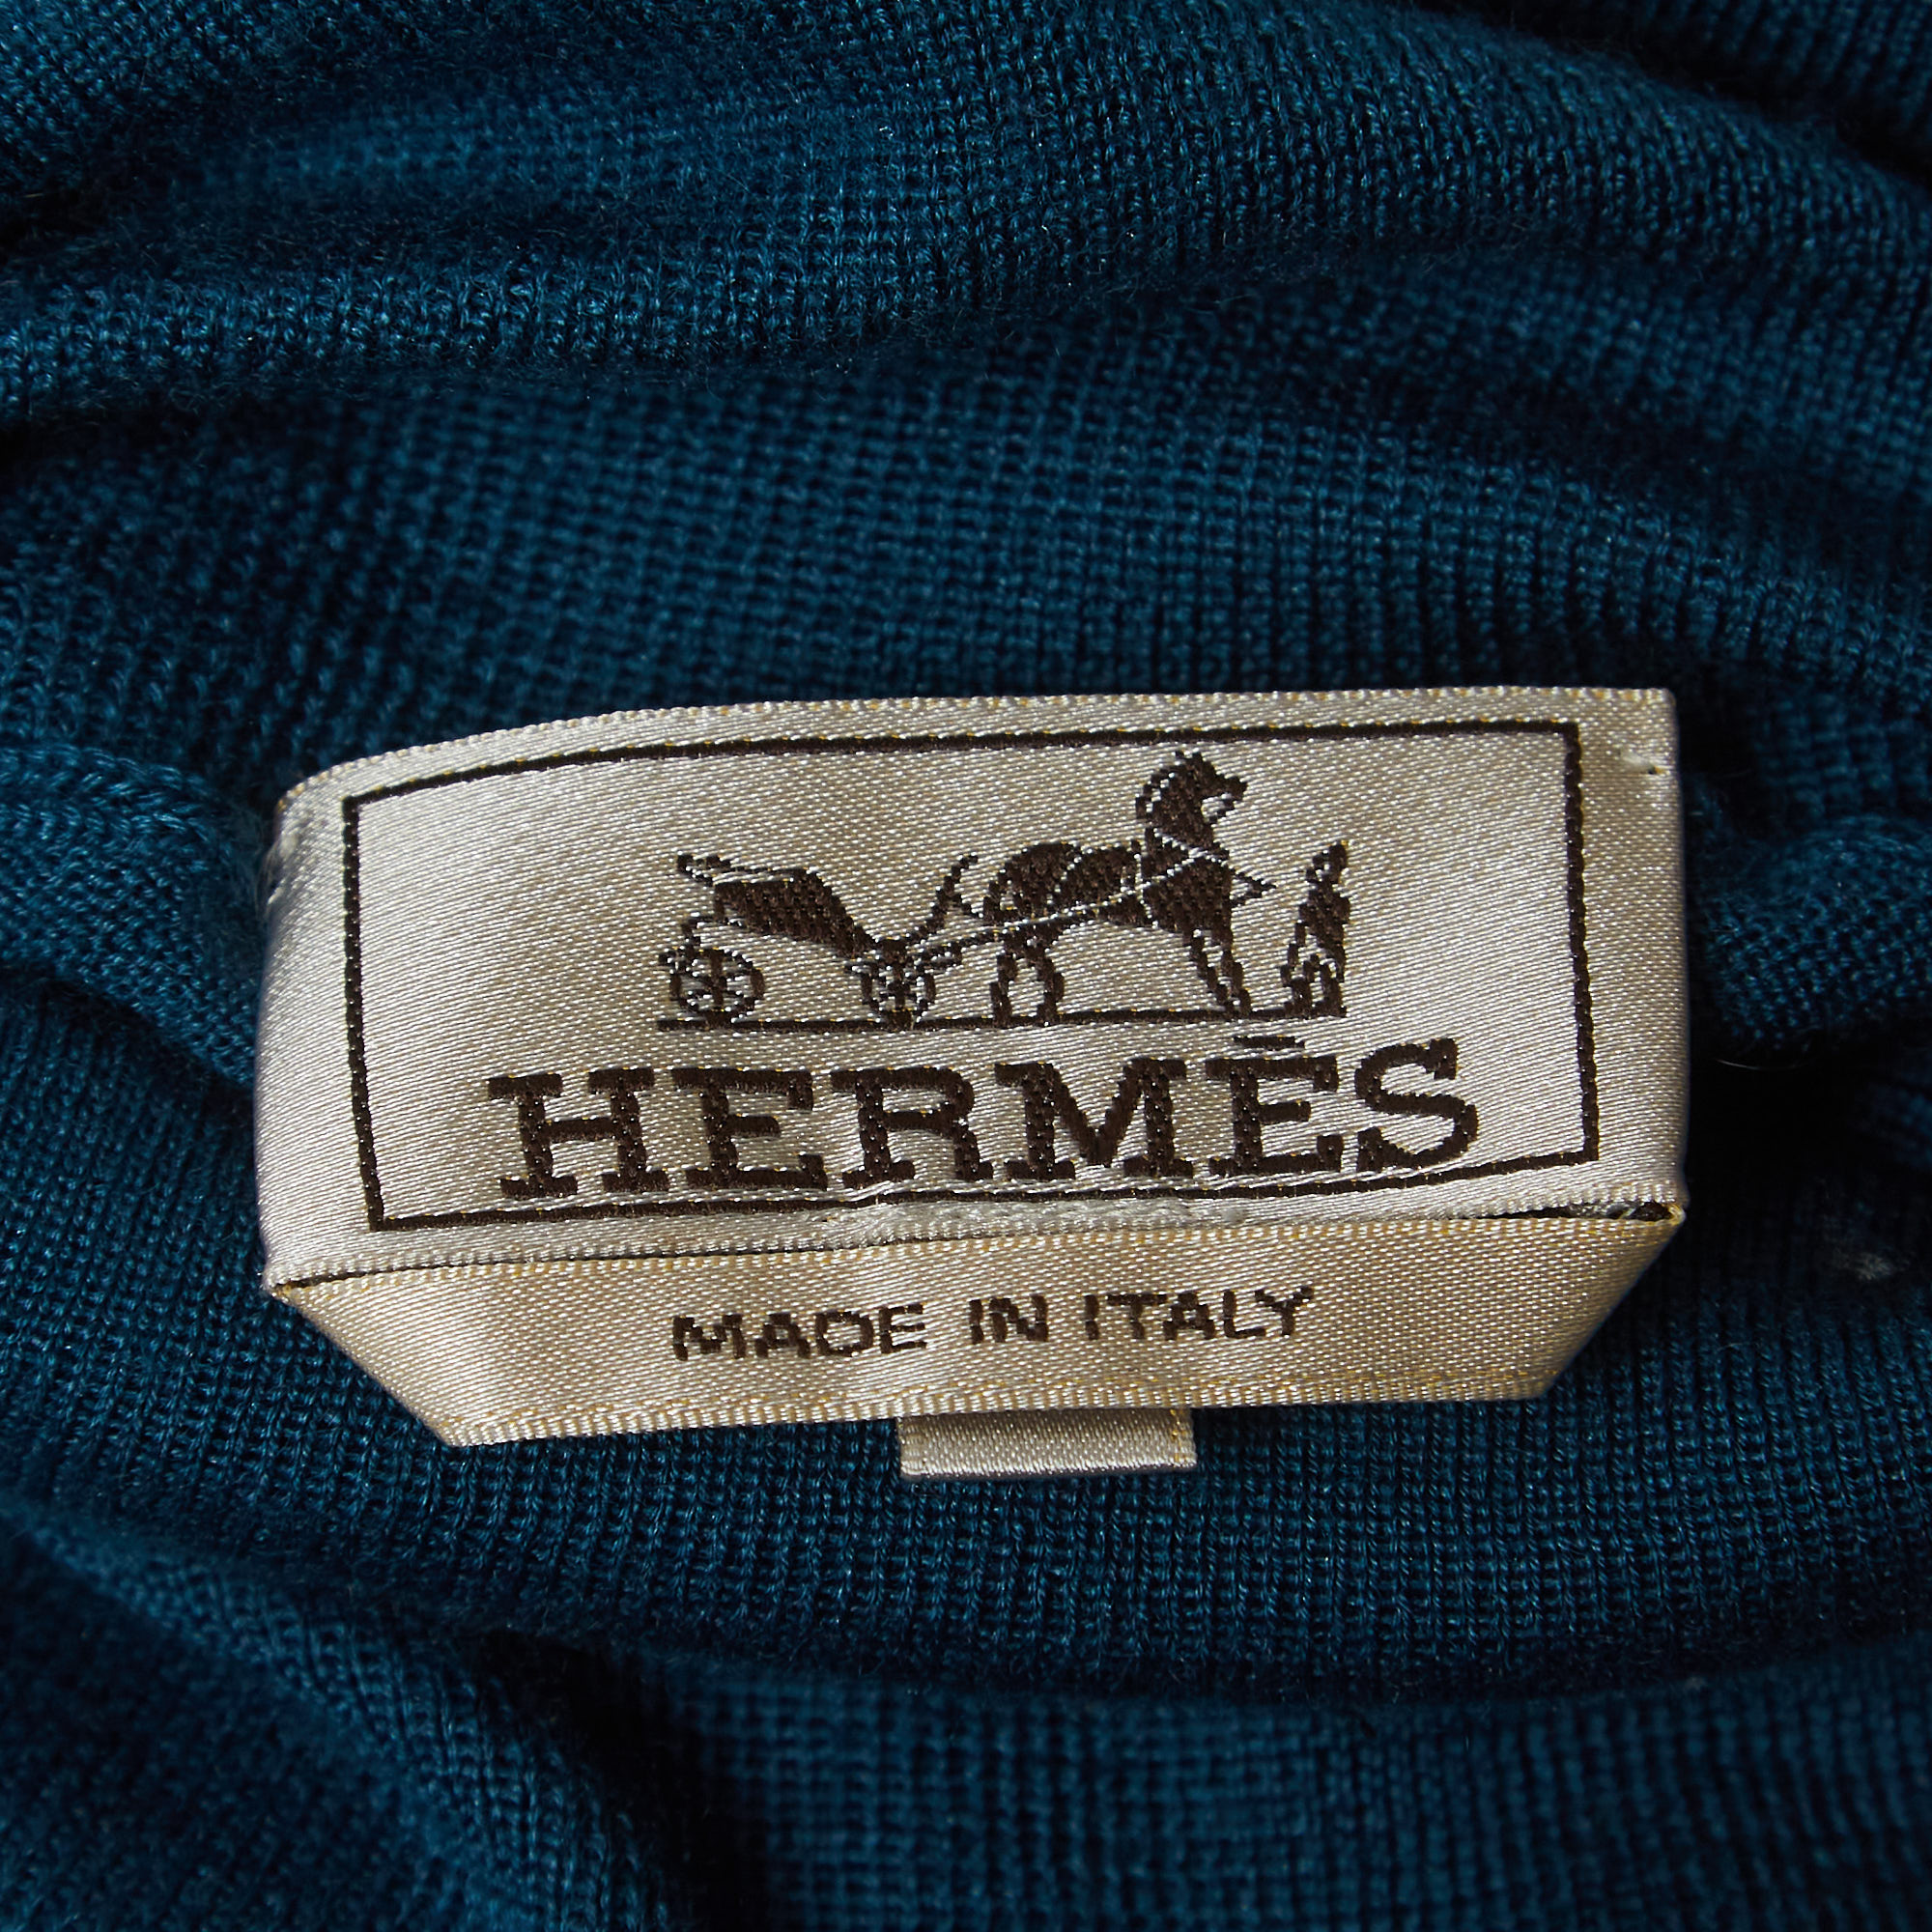 Hermes Teal Blue Cashmere & Silk Knit Turtle Neck Sweater XL